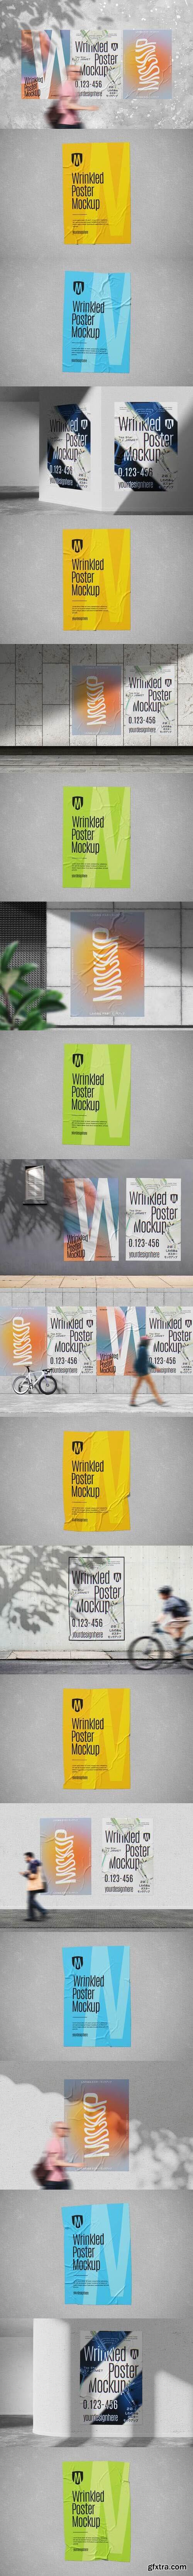 Photorealistic wrinkled poster mockup